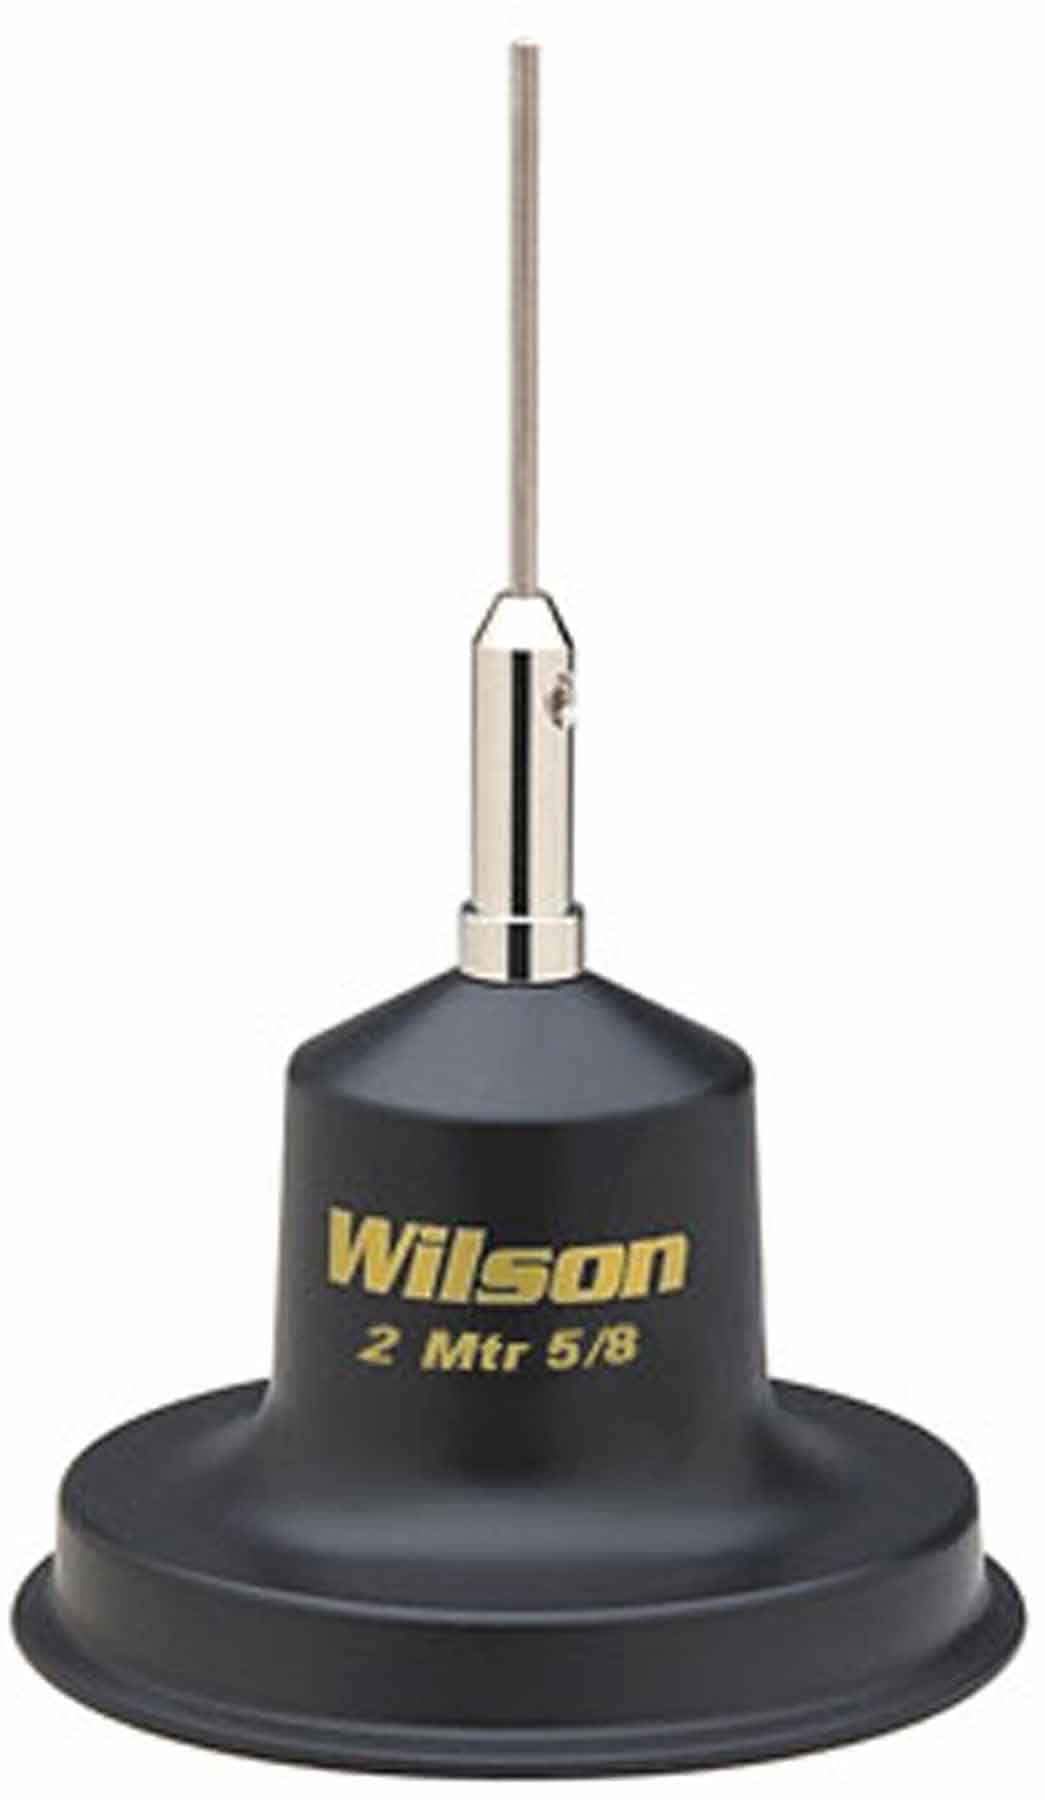 Wilson 880-300200B 2 Meter 5/8 Wave Magnet Mount Antenna w/ 48